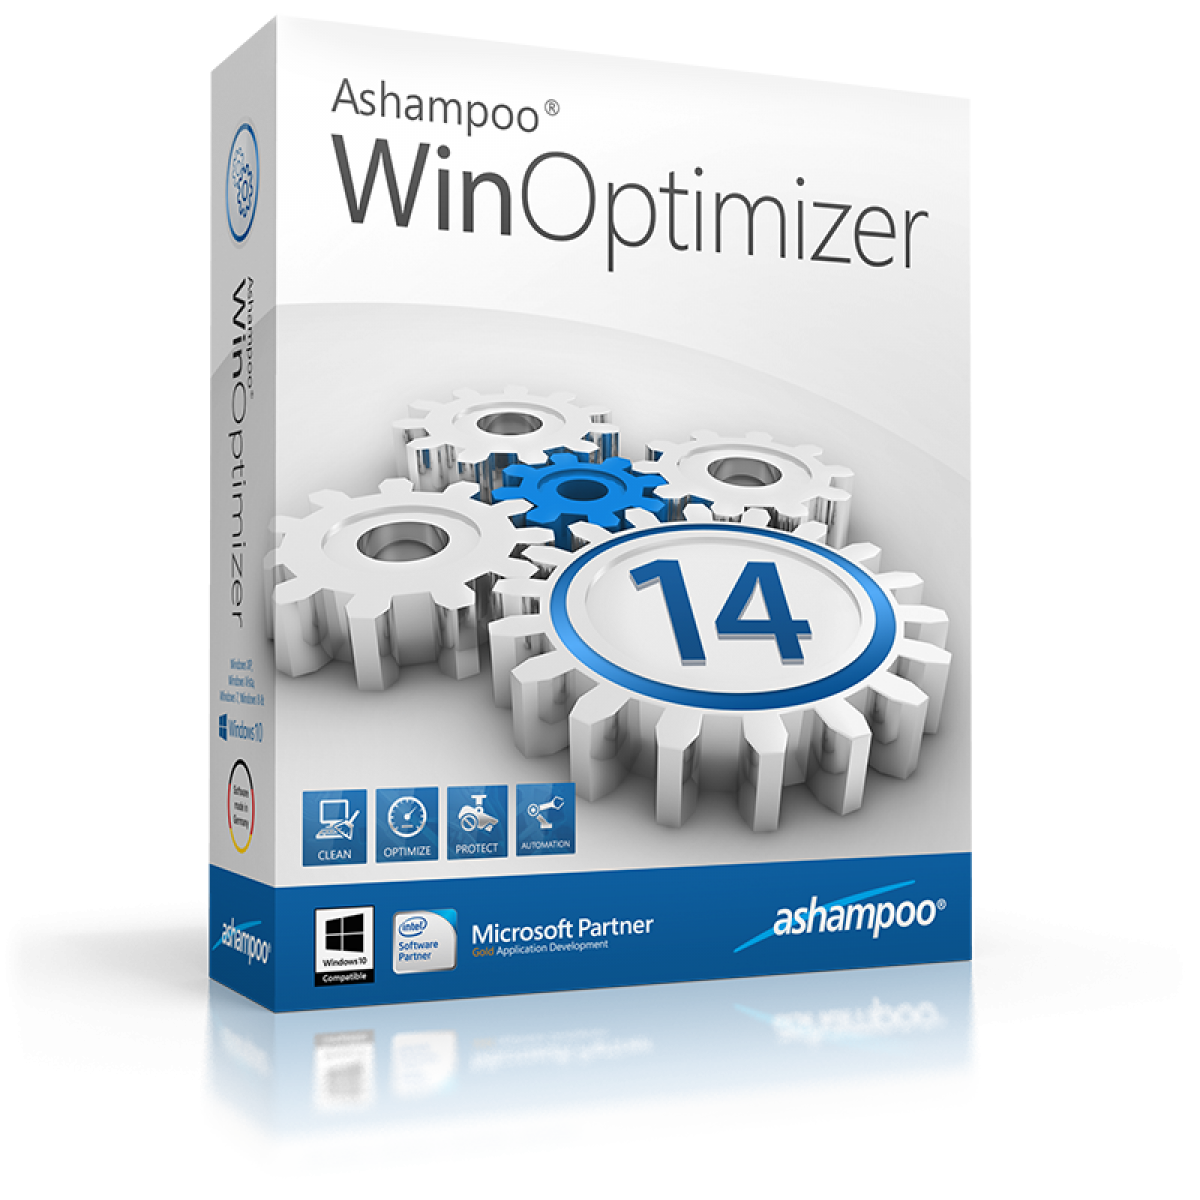 Ashampoo Winoptimizer 4 Free Download